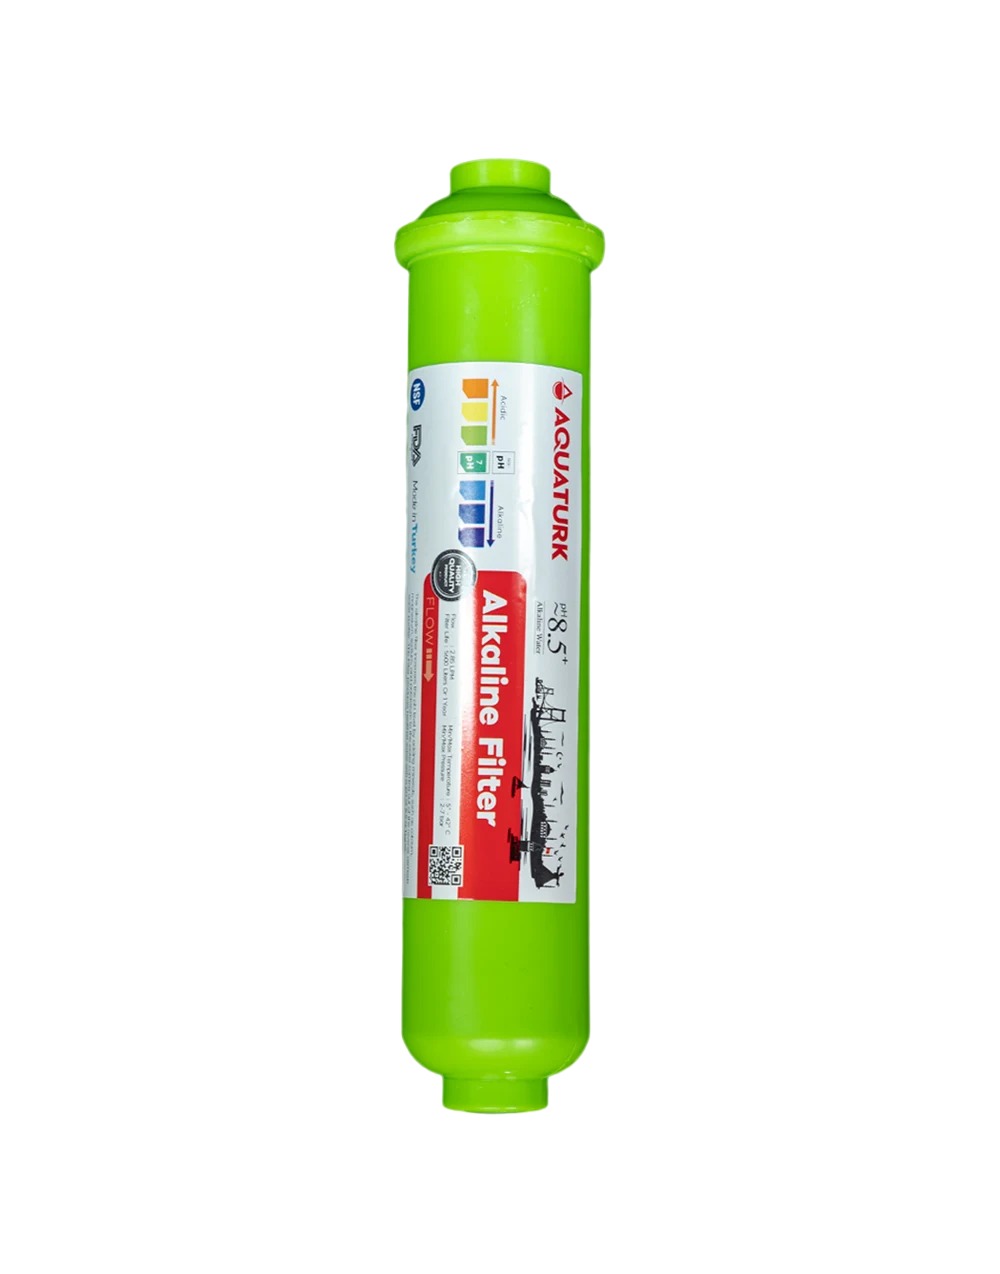 AquaTurk Alkaline Water Filter Cartridge